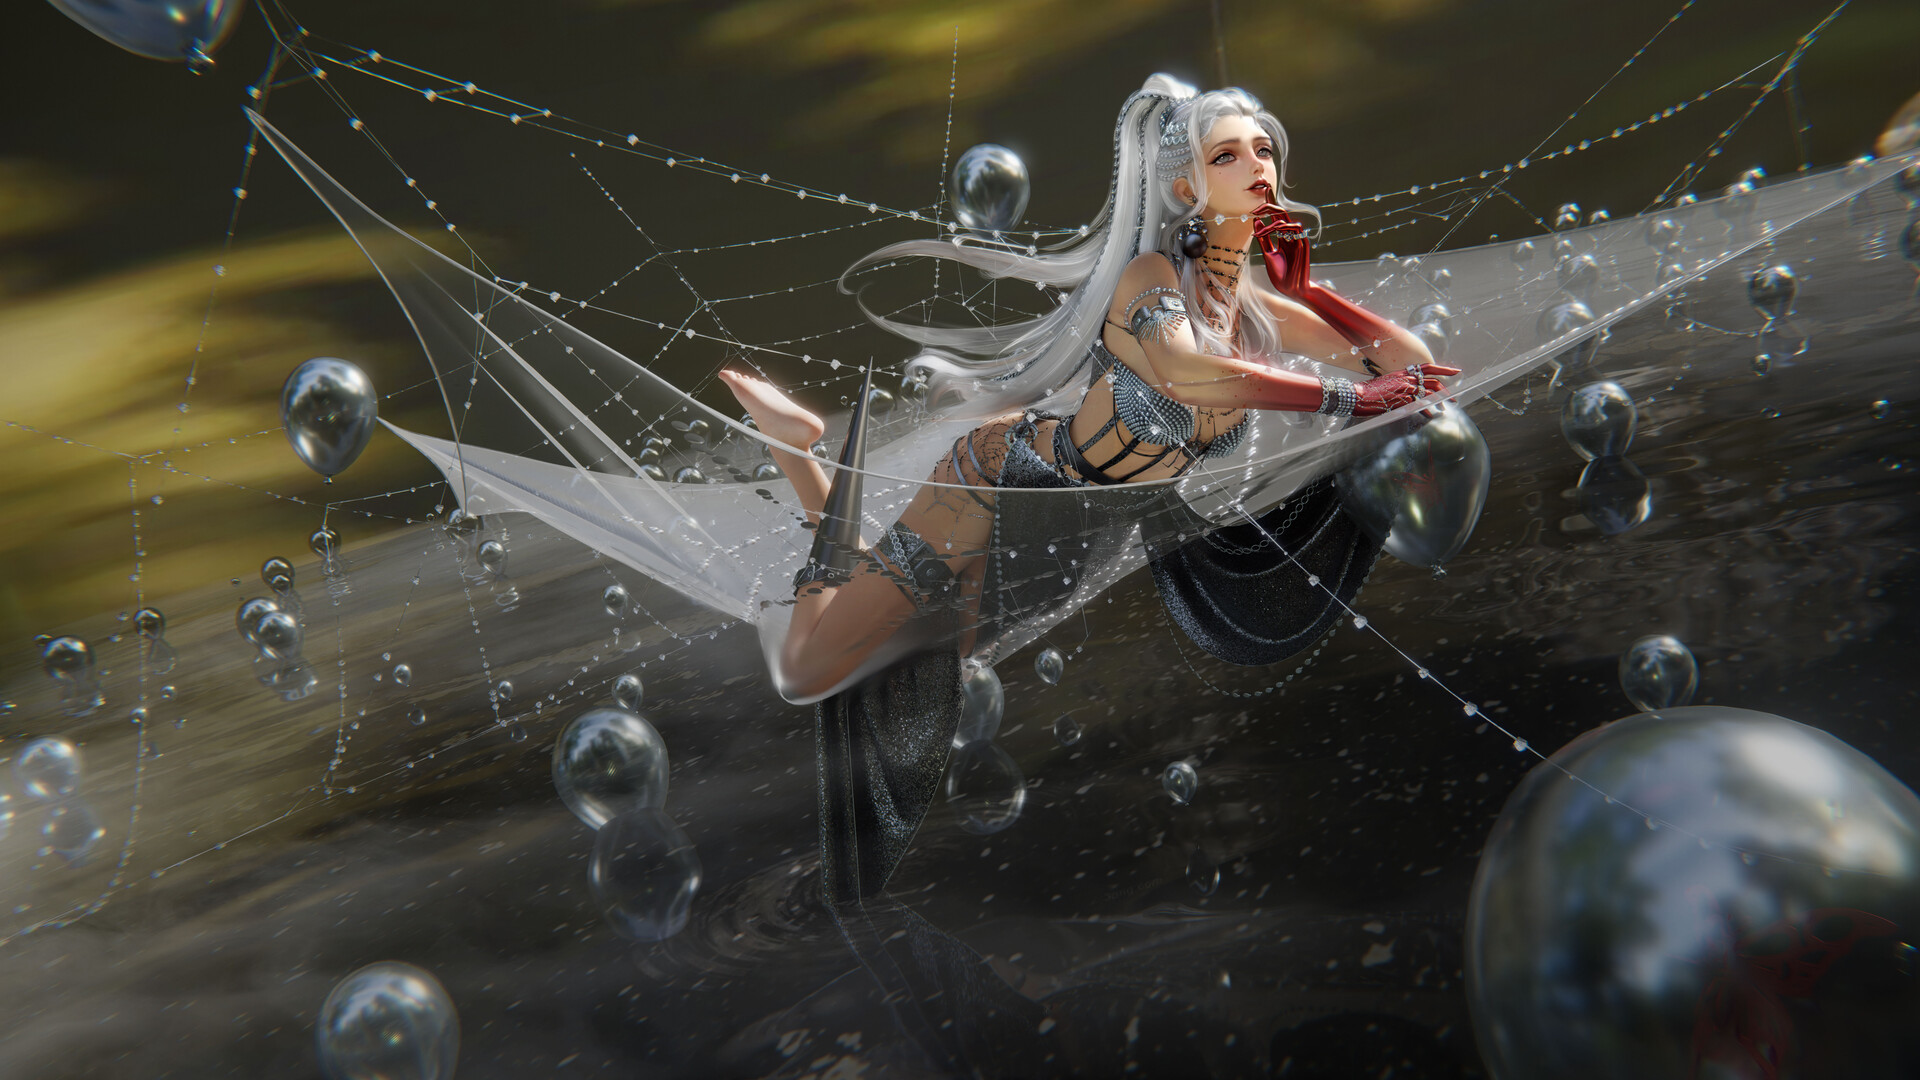 General 1920x1080 character design  digital art CGI artwork illustration women white hair Asian concept art spiderwebs balloon long hair abstract